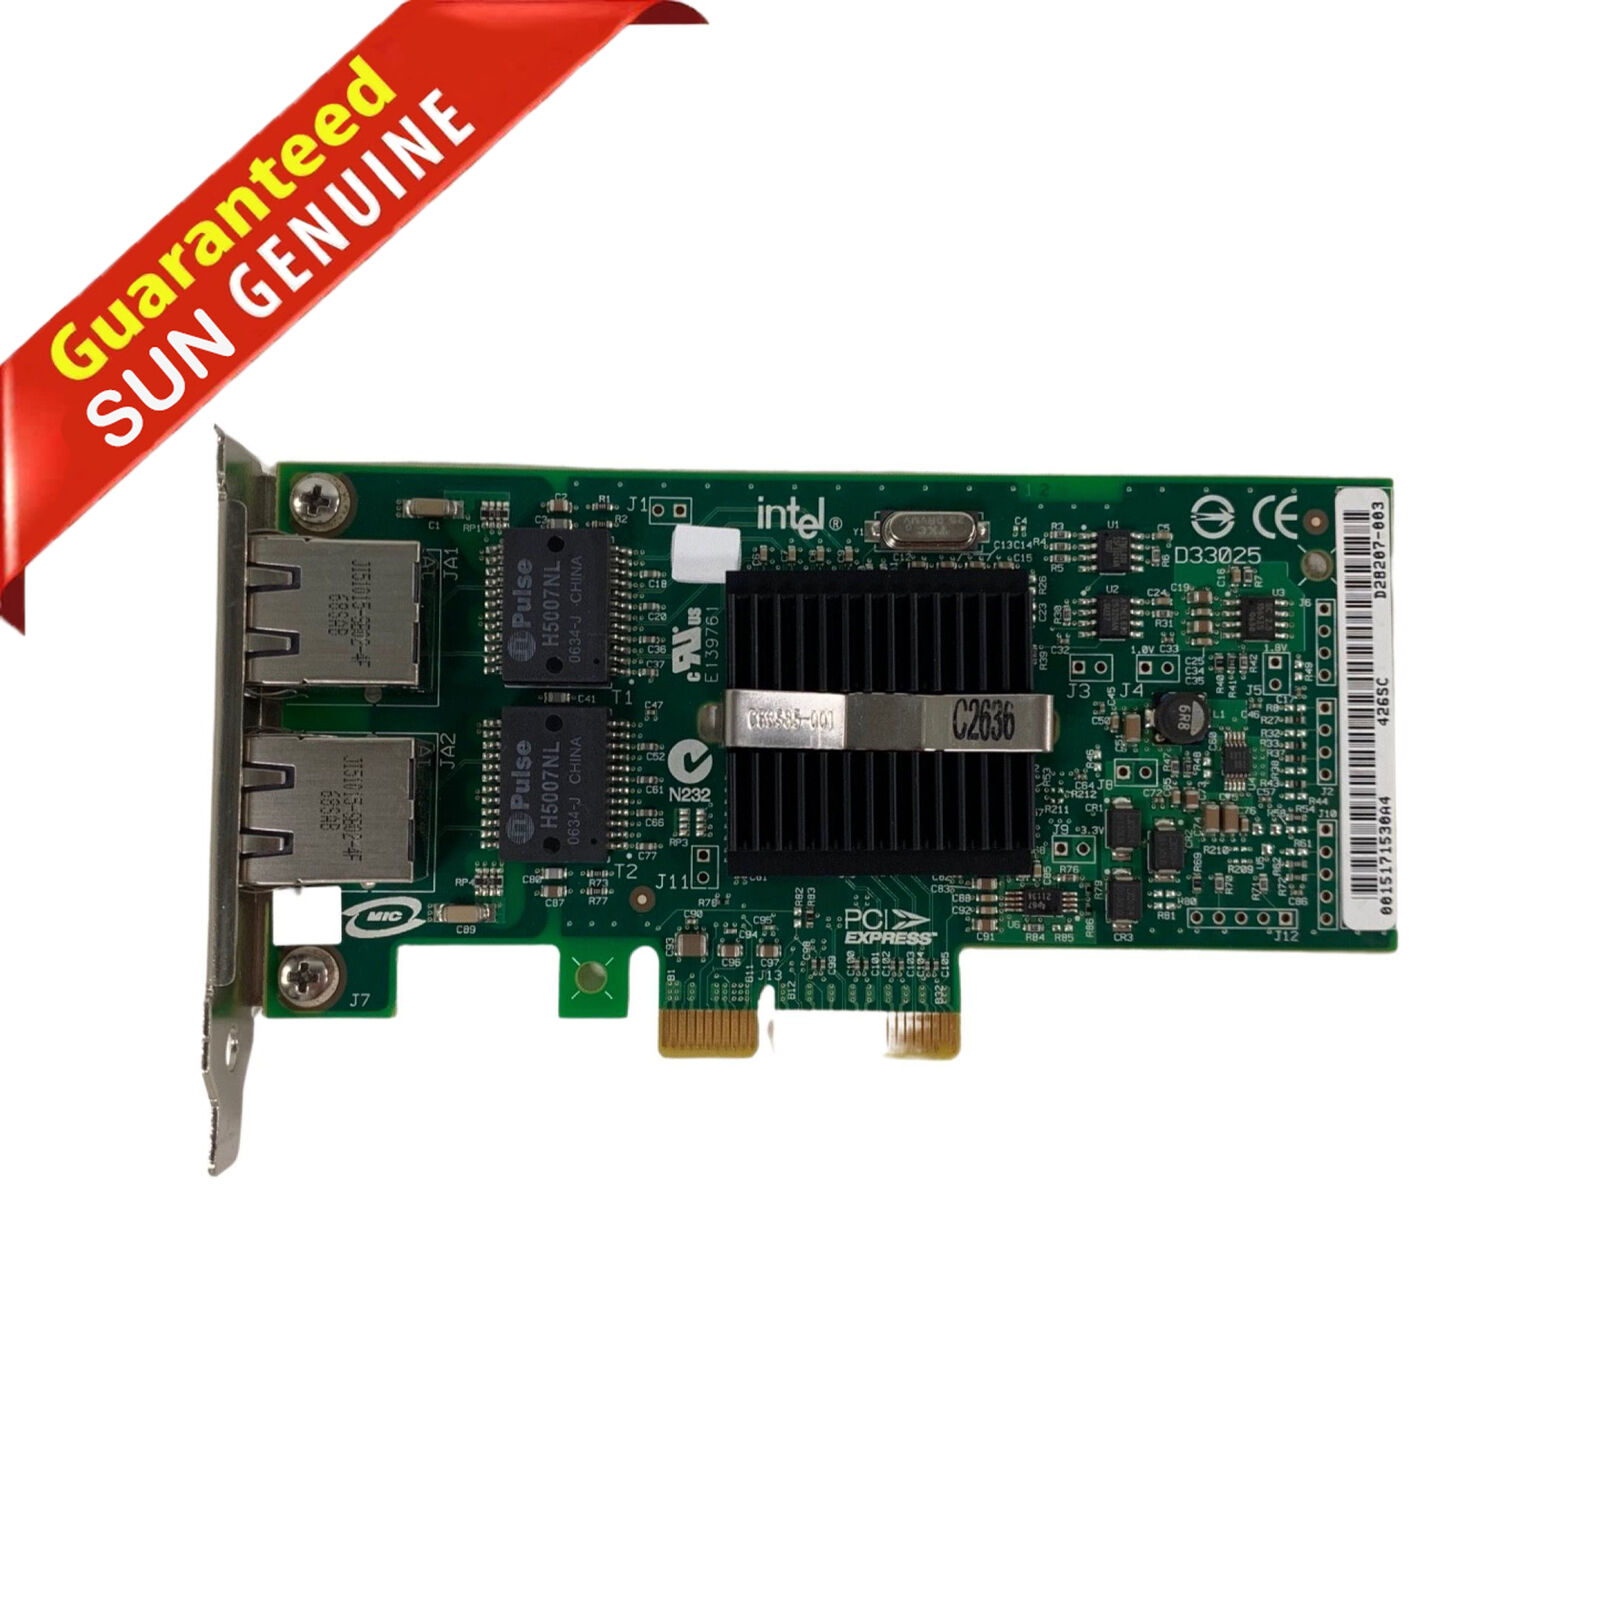 Sun Intel D33025 Dual Port PCI Express Ethernet Network Adapter 371-0905-01